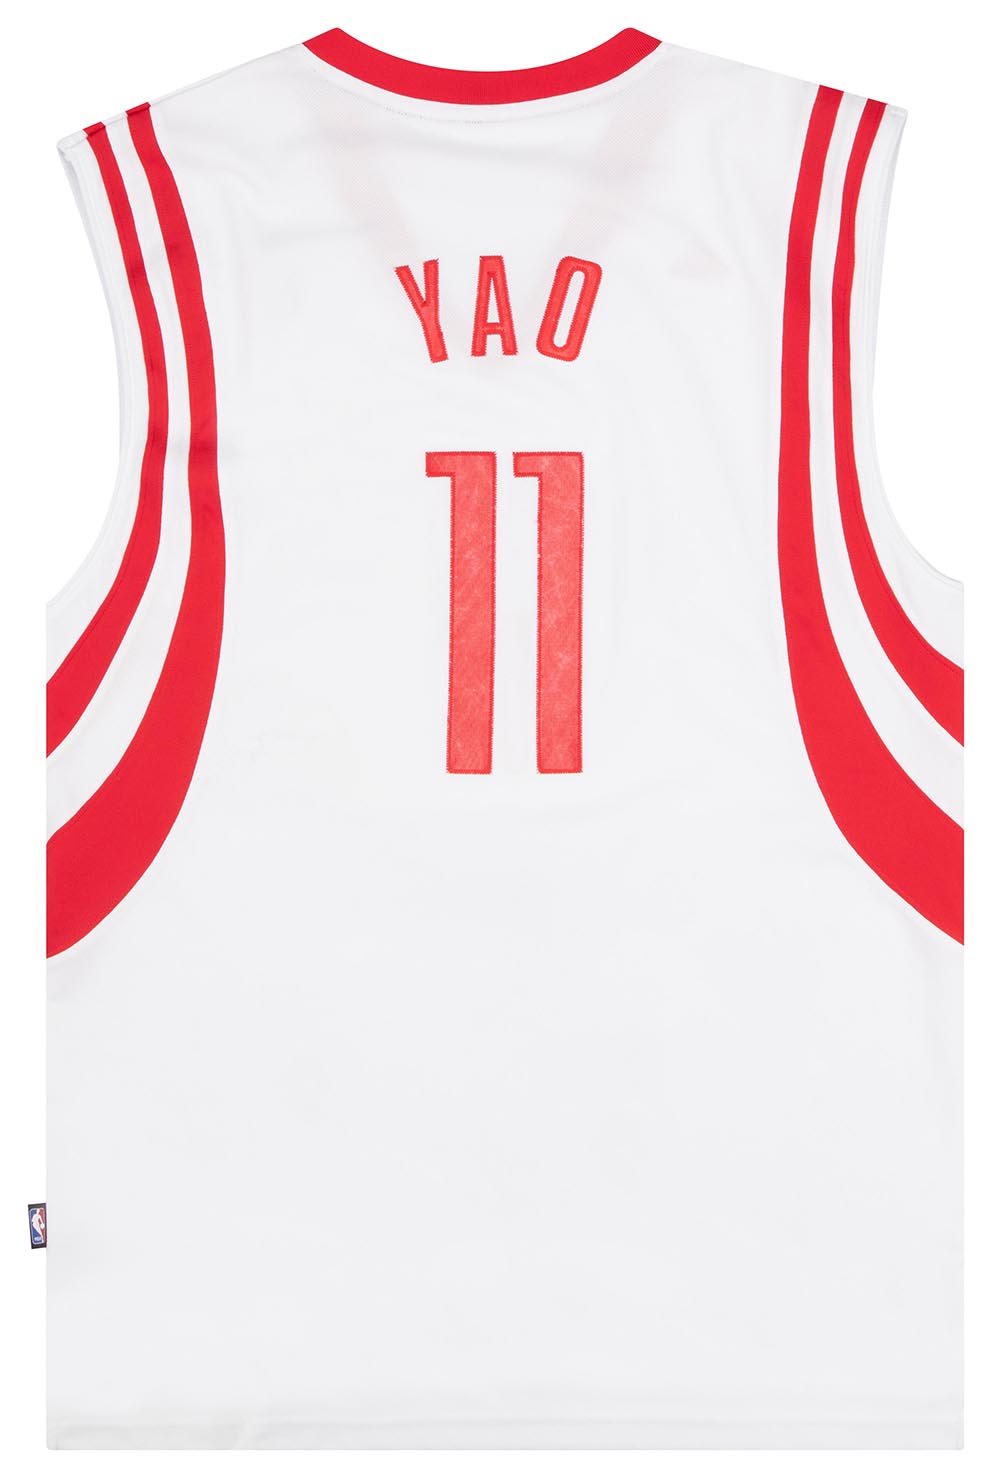 Houston Rockets Yao Ming #11 Jersey By Adidas Hardwood Classics